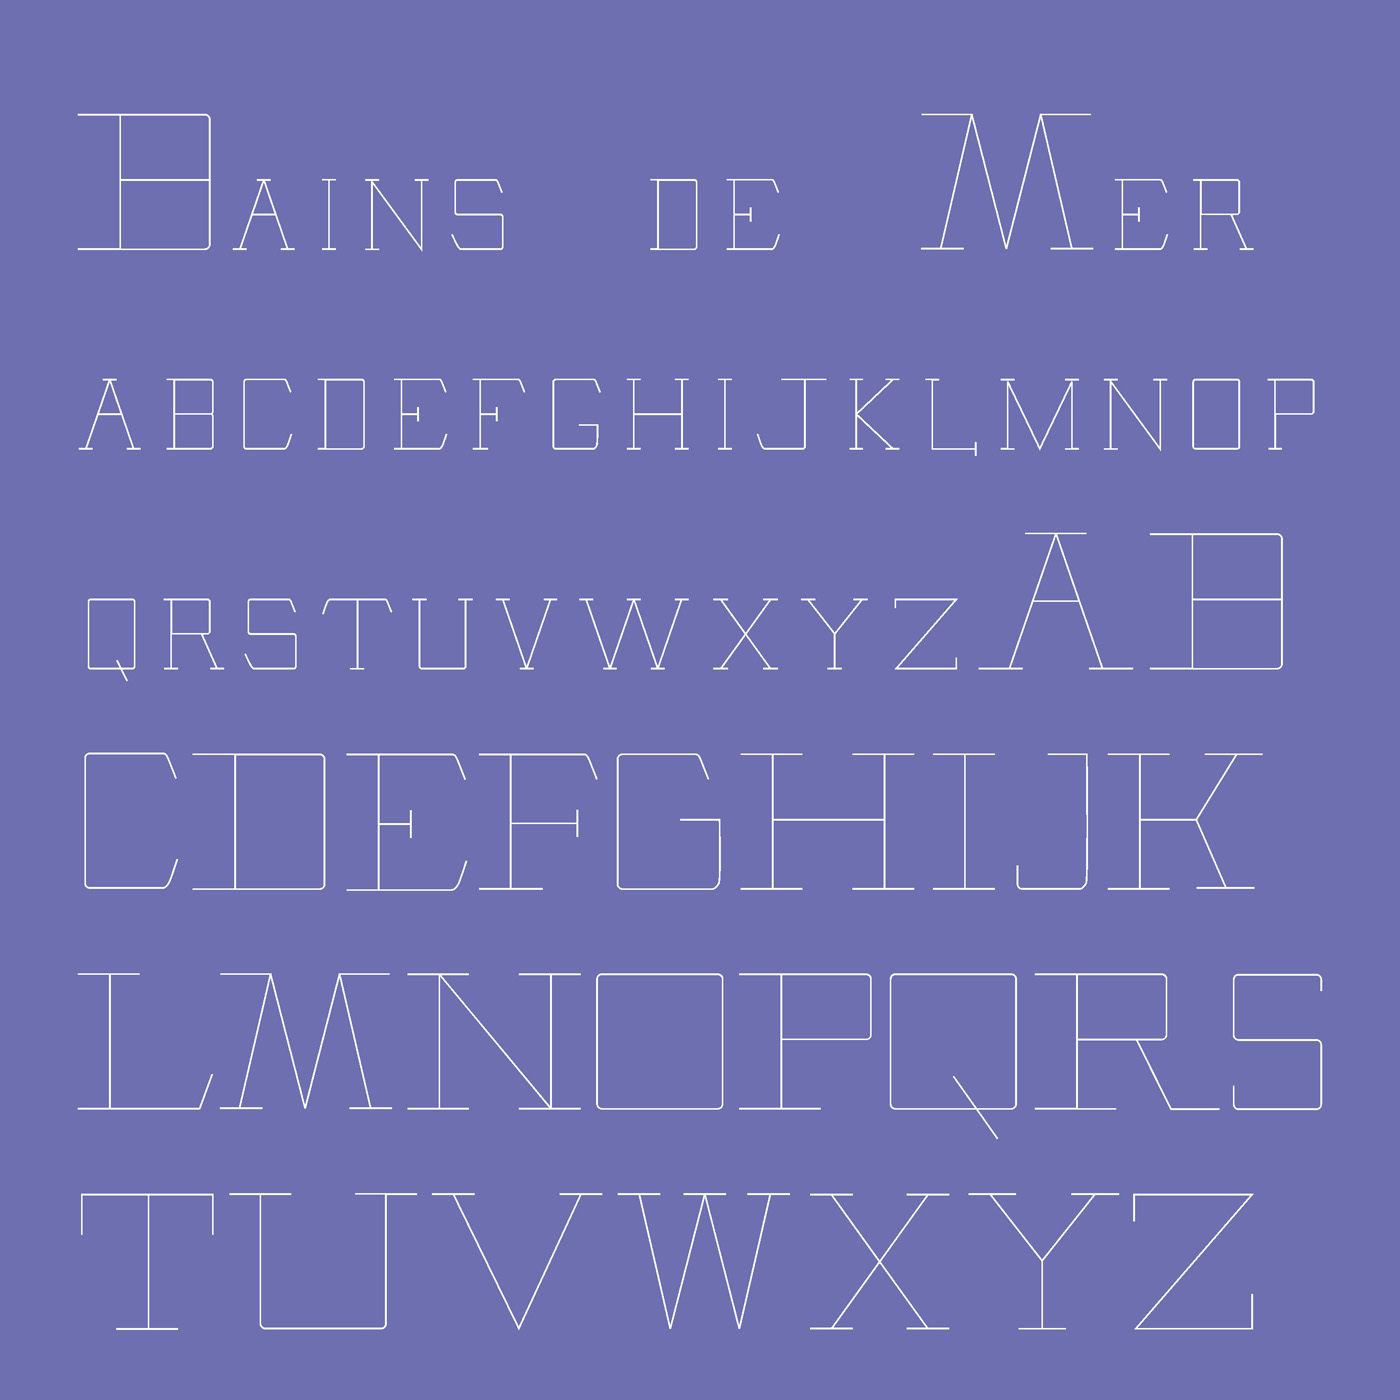 Bains de Mer typeface designed by Thomas Bush